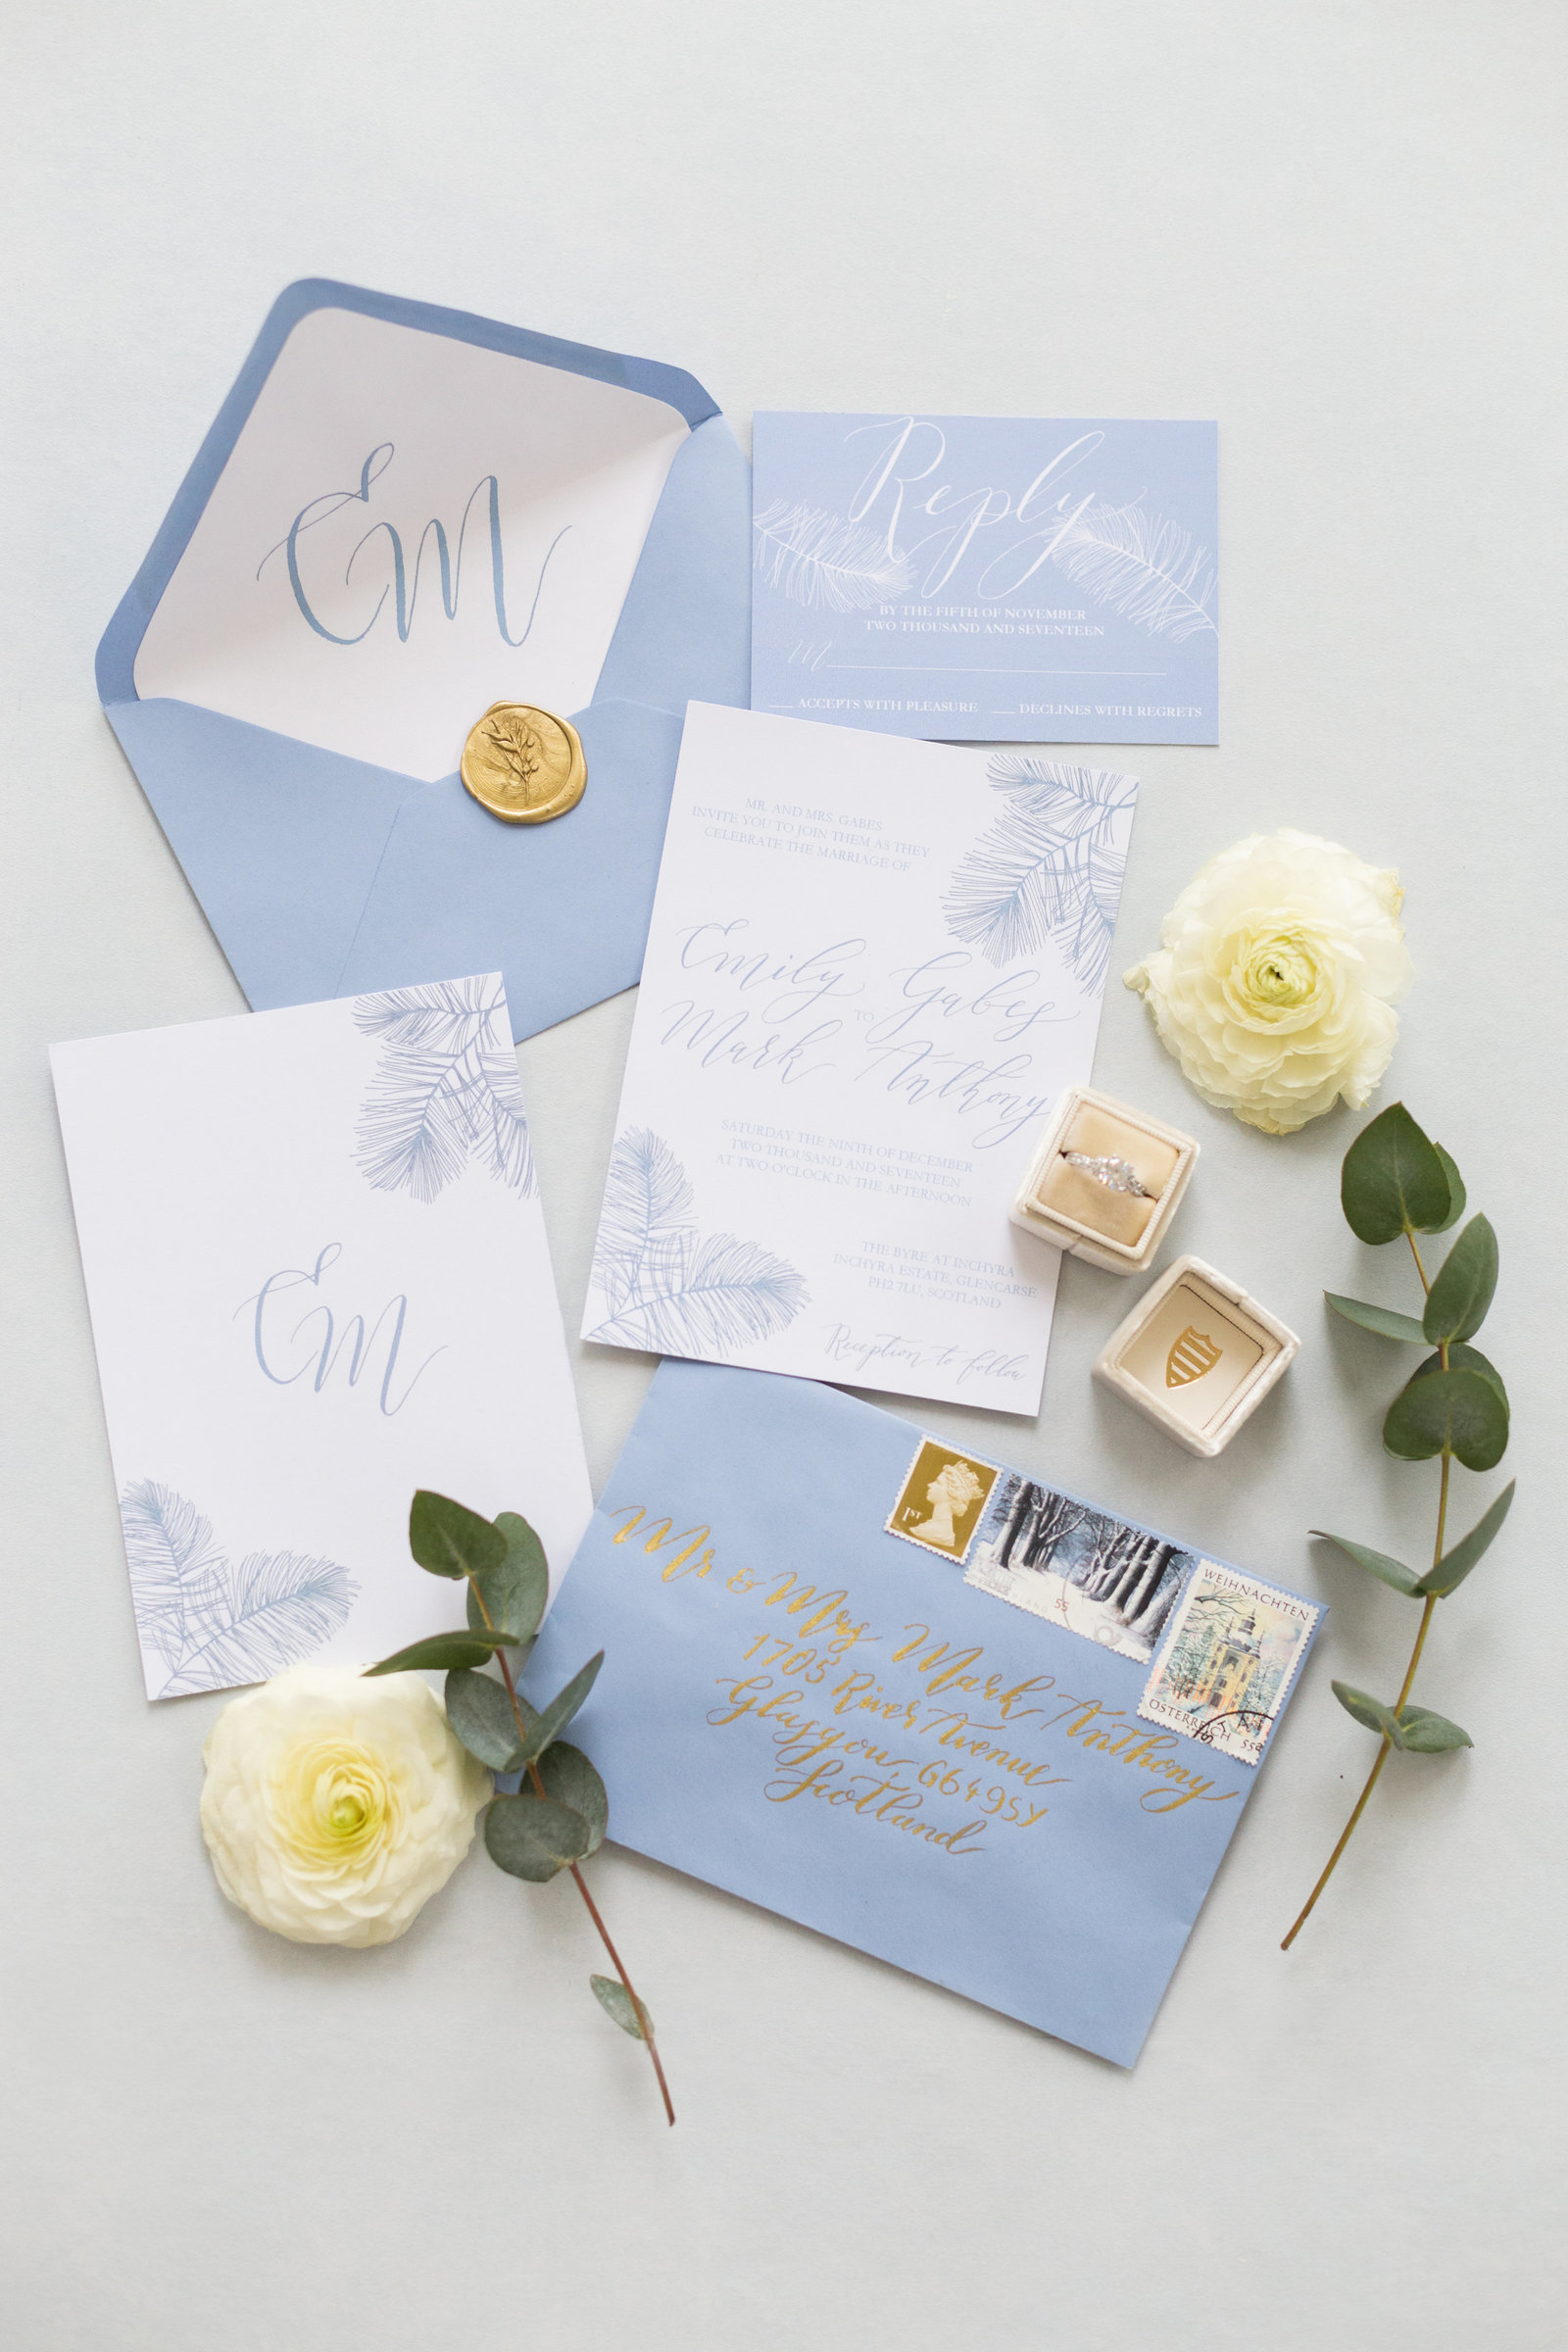 Fern Scottish Wedding Invitations in blue white and gold